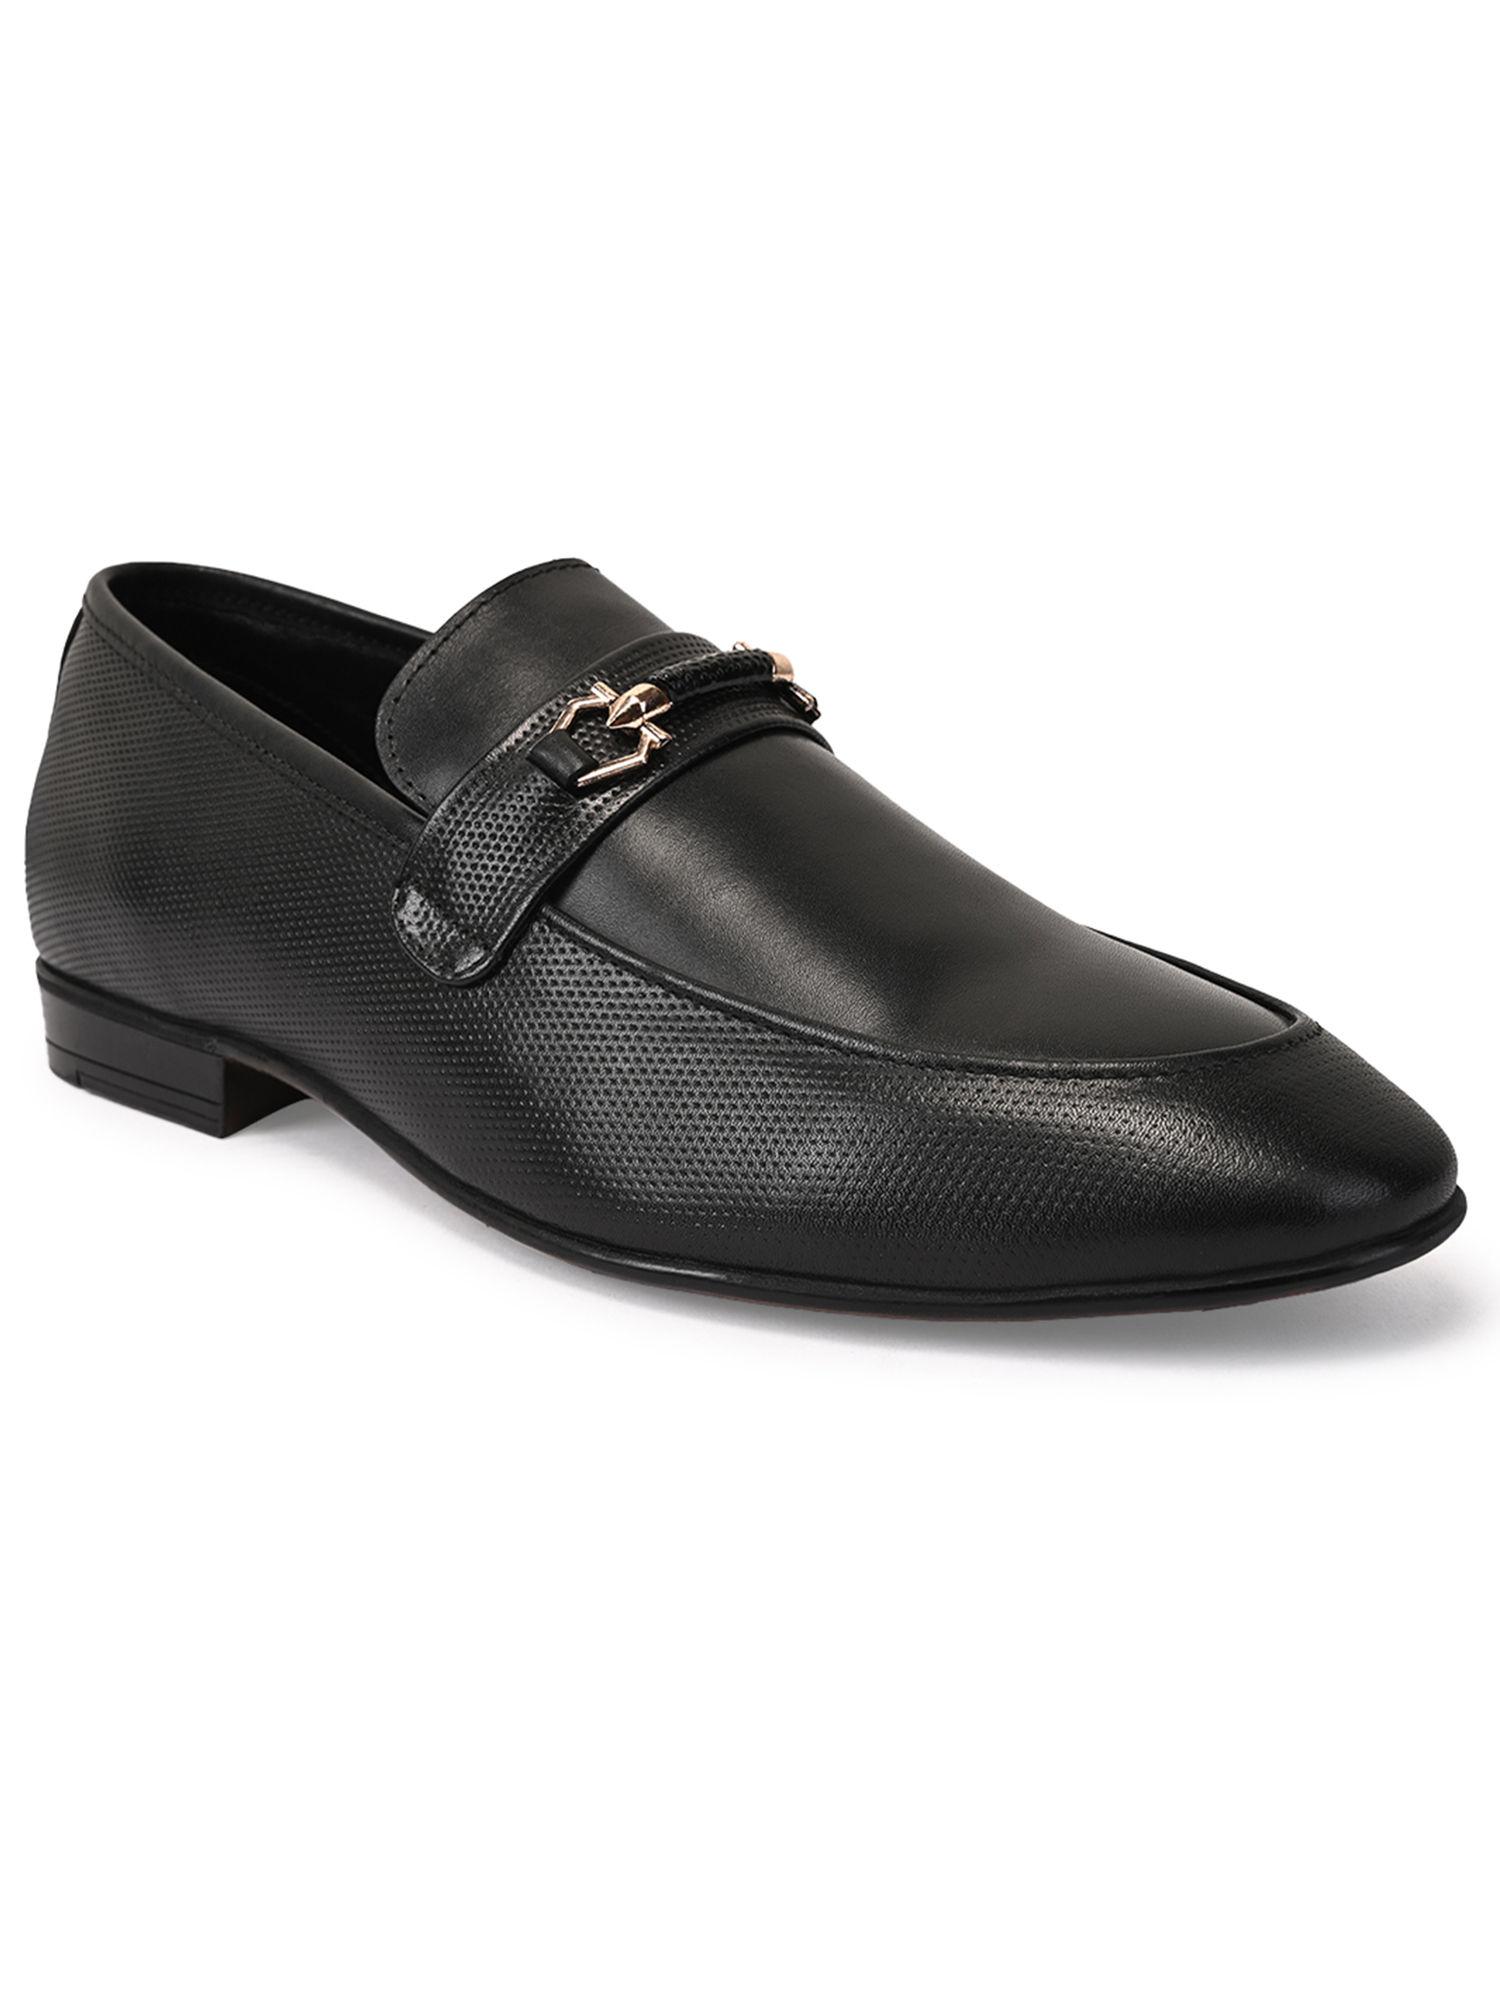 leathers men black genuine leather formal slip on shoes